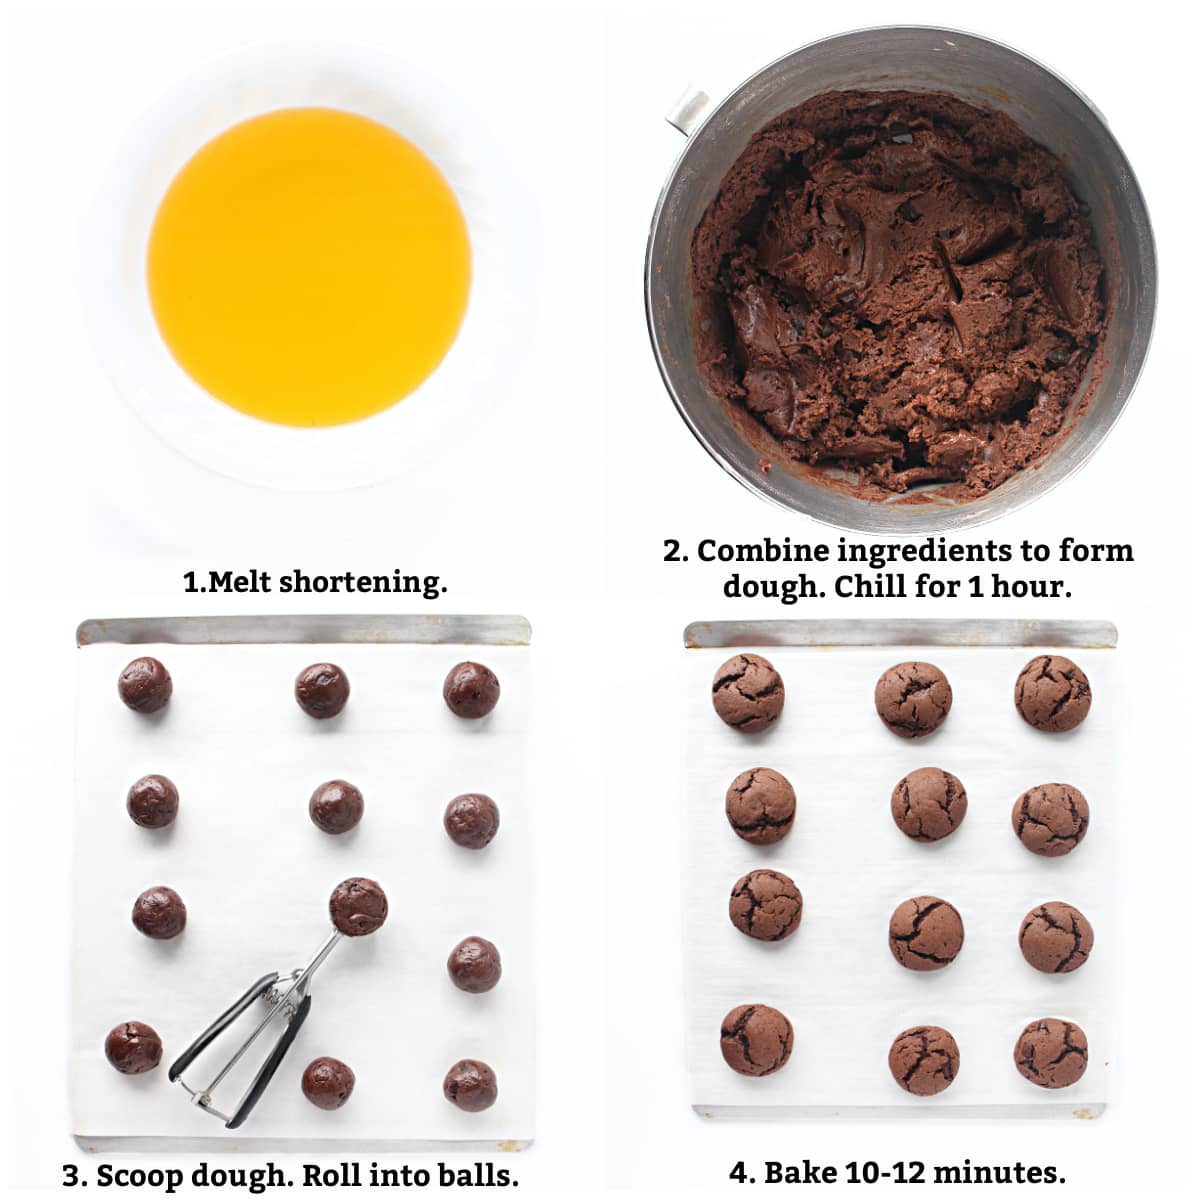 Instructions: melt shortening, mix dough ingredients, scoop dough balls, bake.